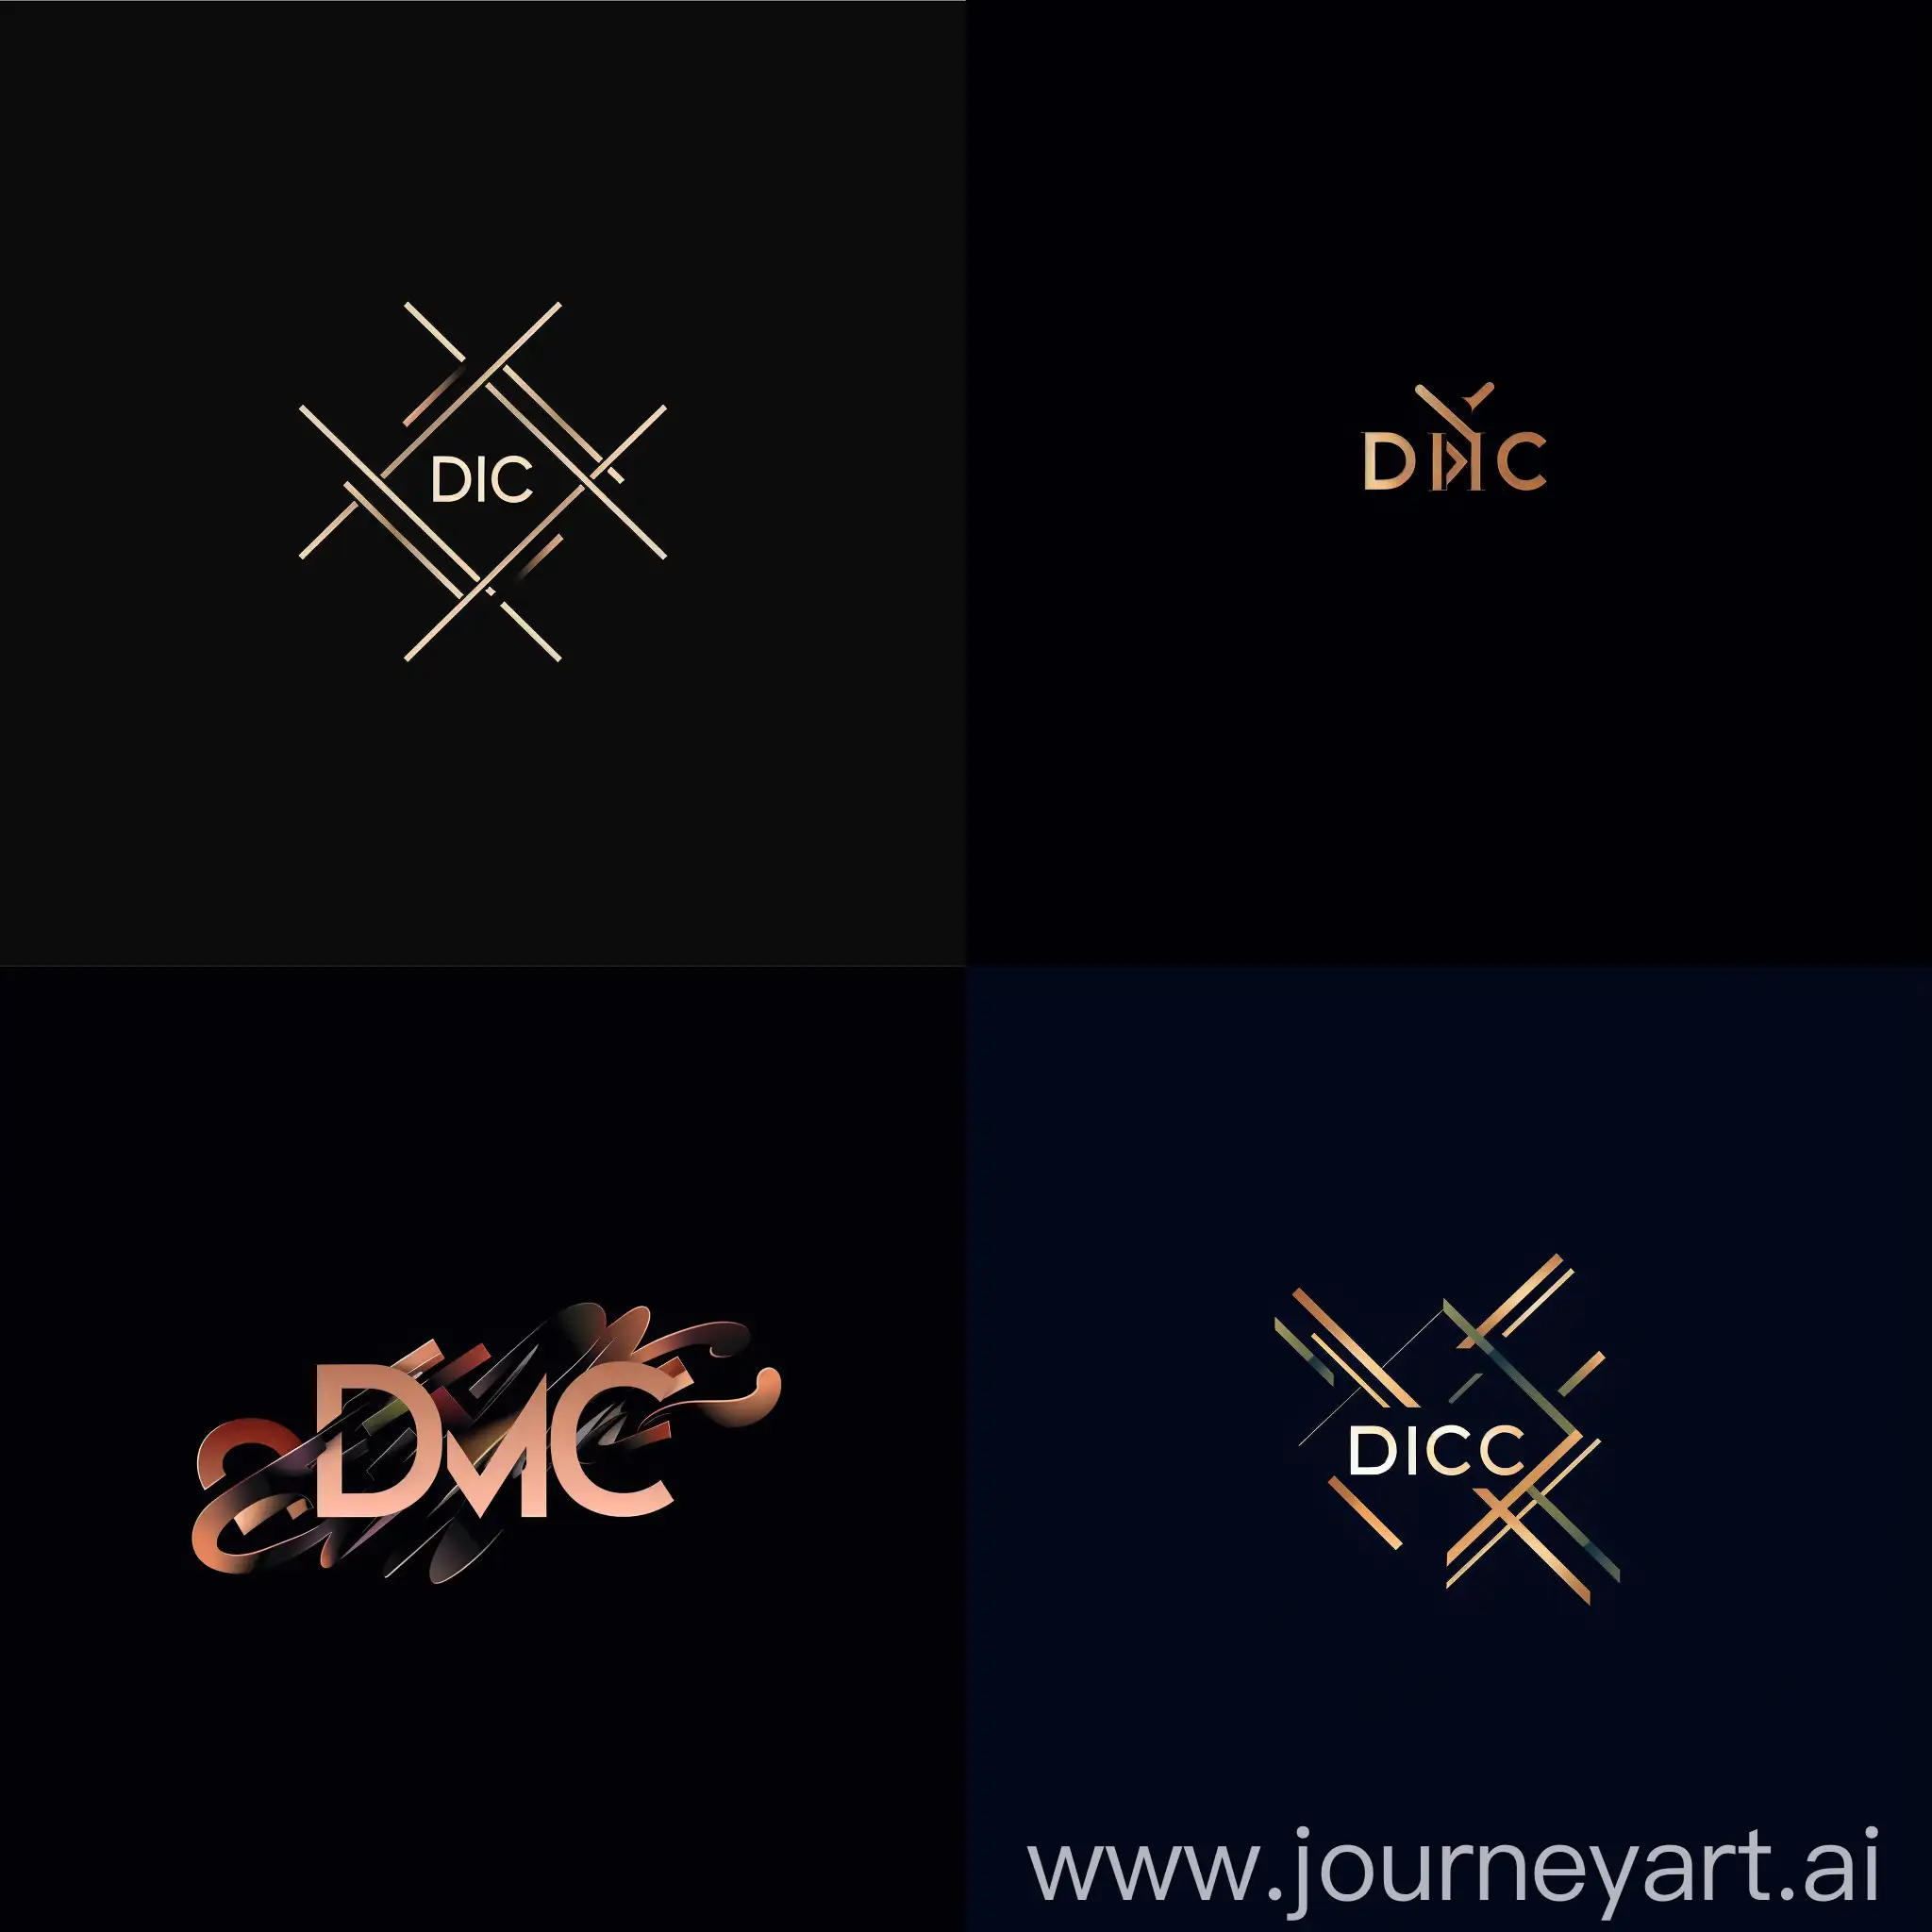 Minimalistic-Dark-Logo-Design-with-DKC-Inscription